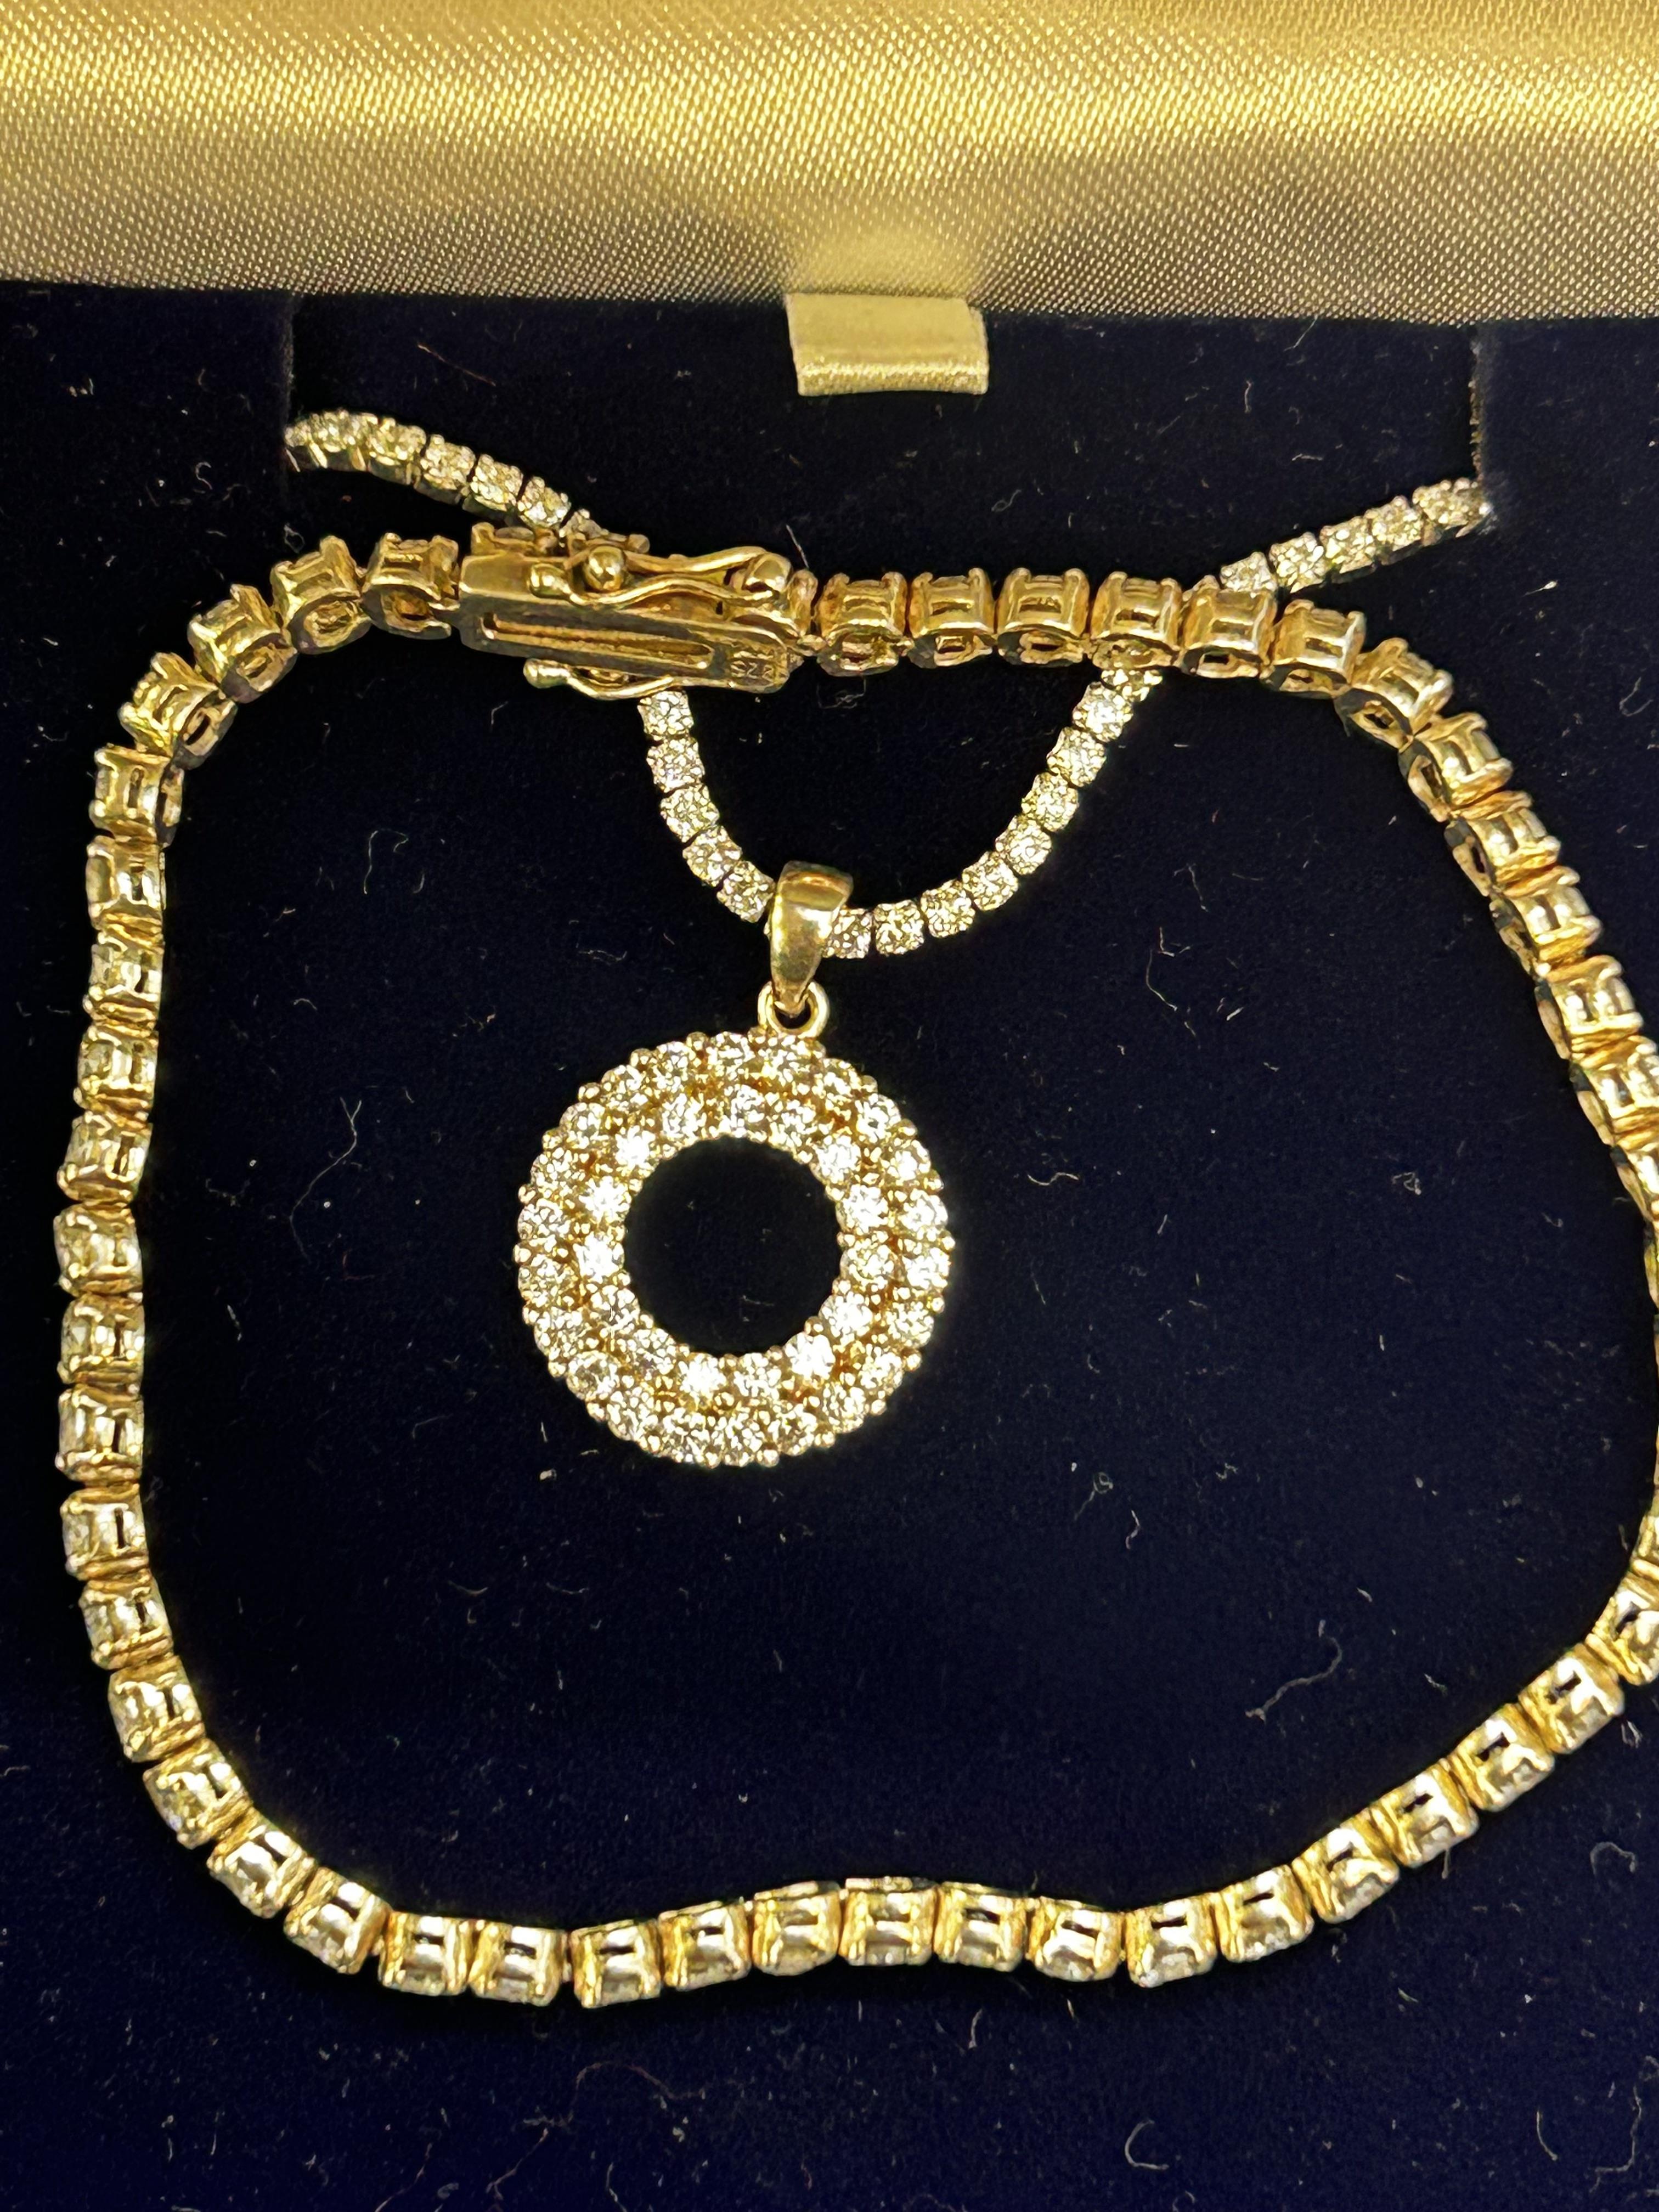 Boxed silver necklace & bracelet